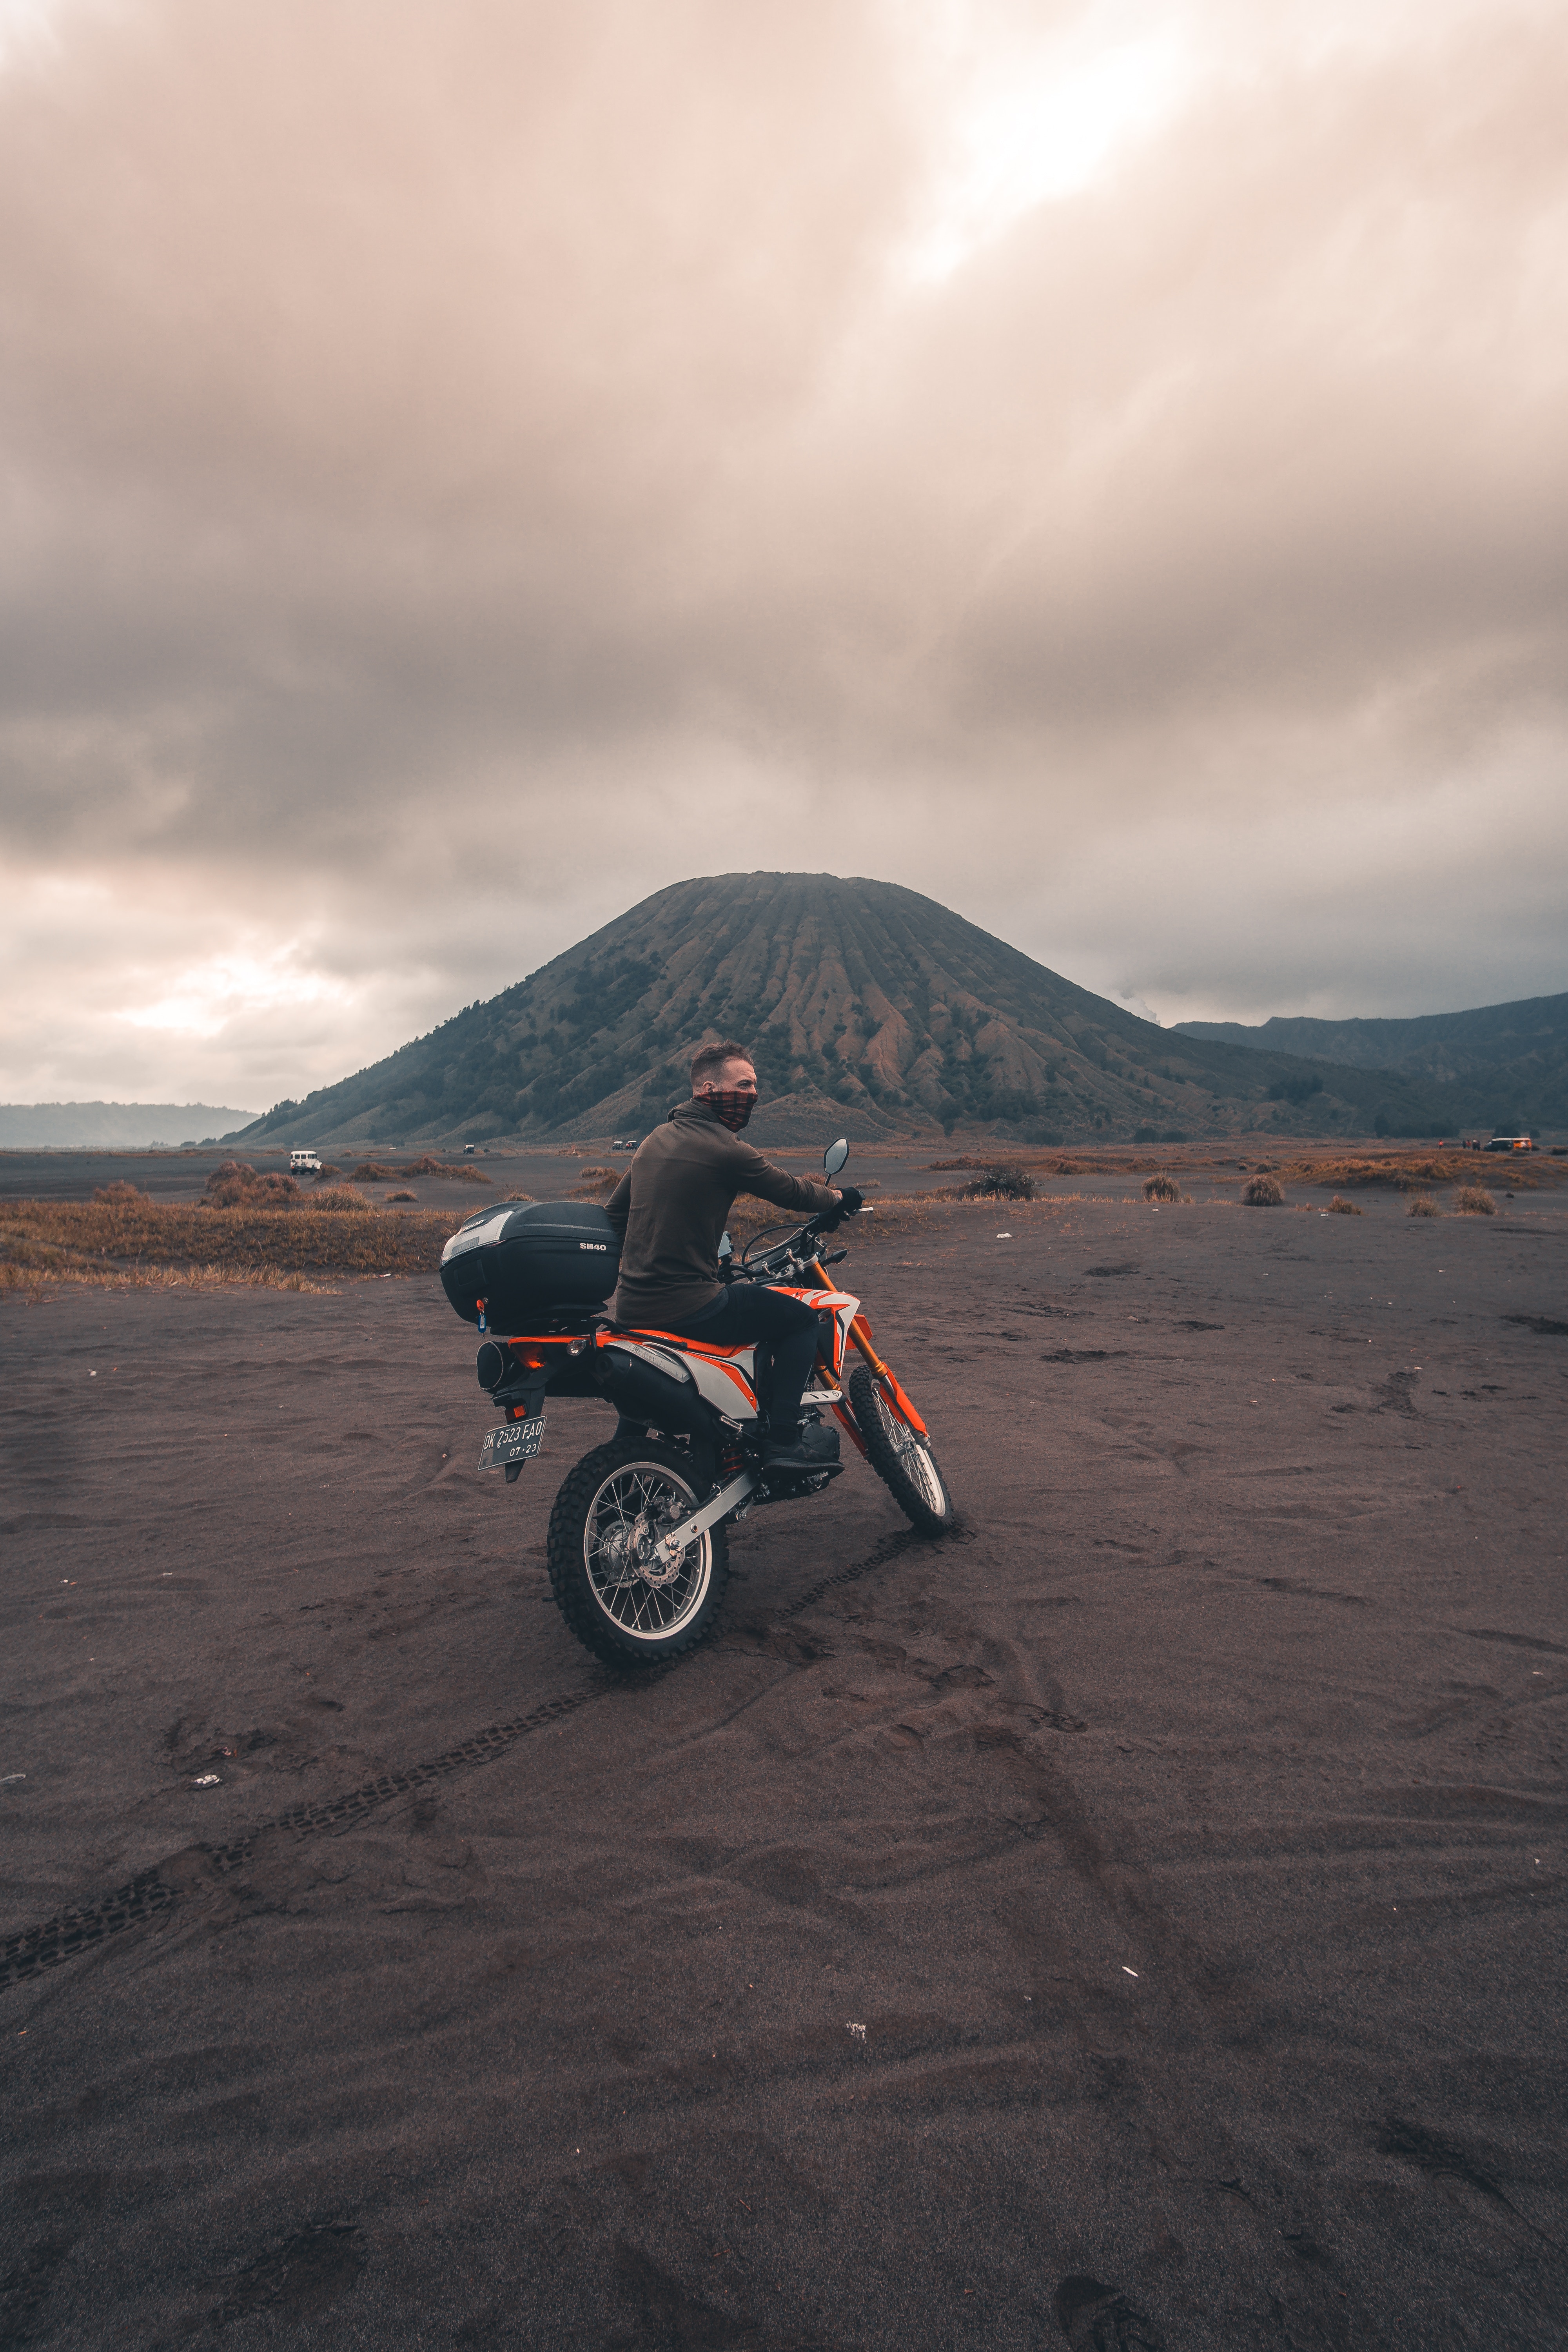 137126 Bild herunterladen sand, motorräder, motorradfahrer, motorrad, vulkan, indonesien - Hintergrundbilder und Bildschirmschoner kostenlos